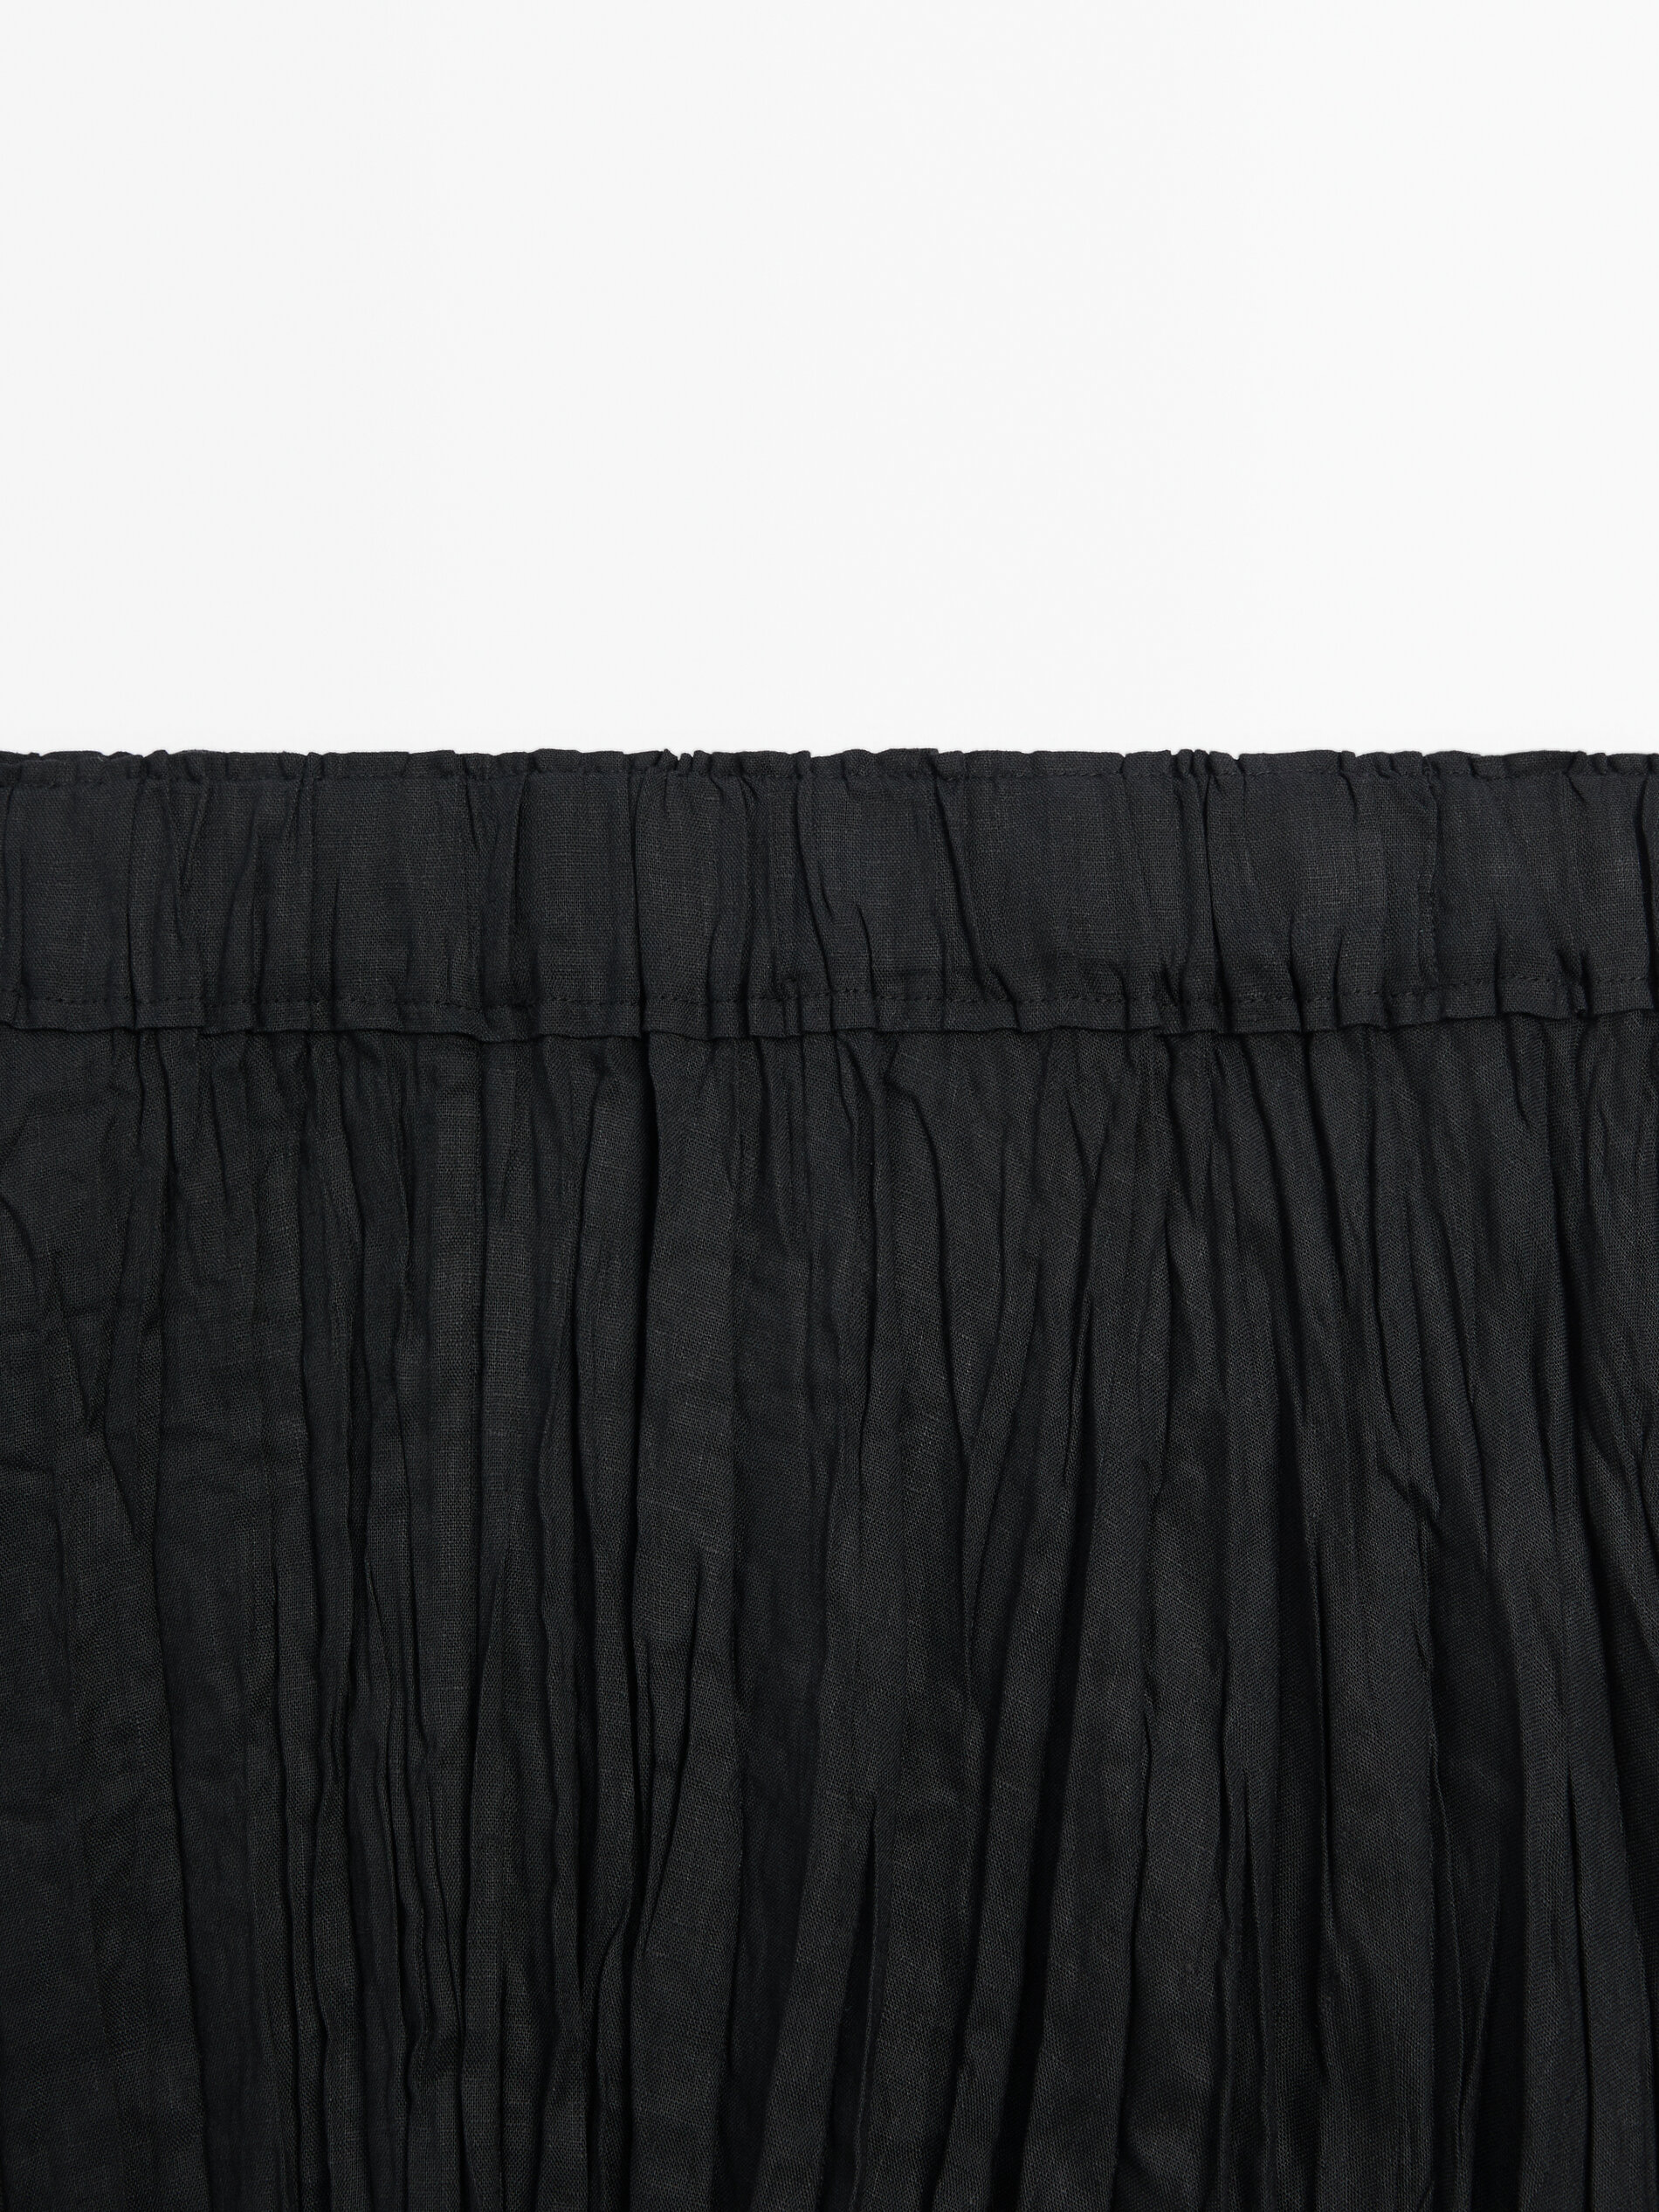 Falda midi negra plisada